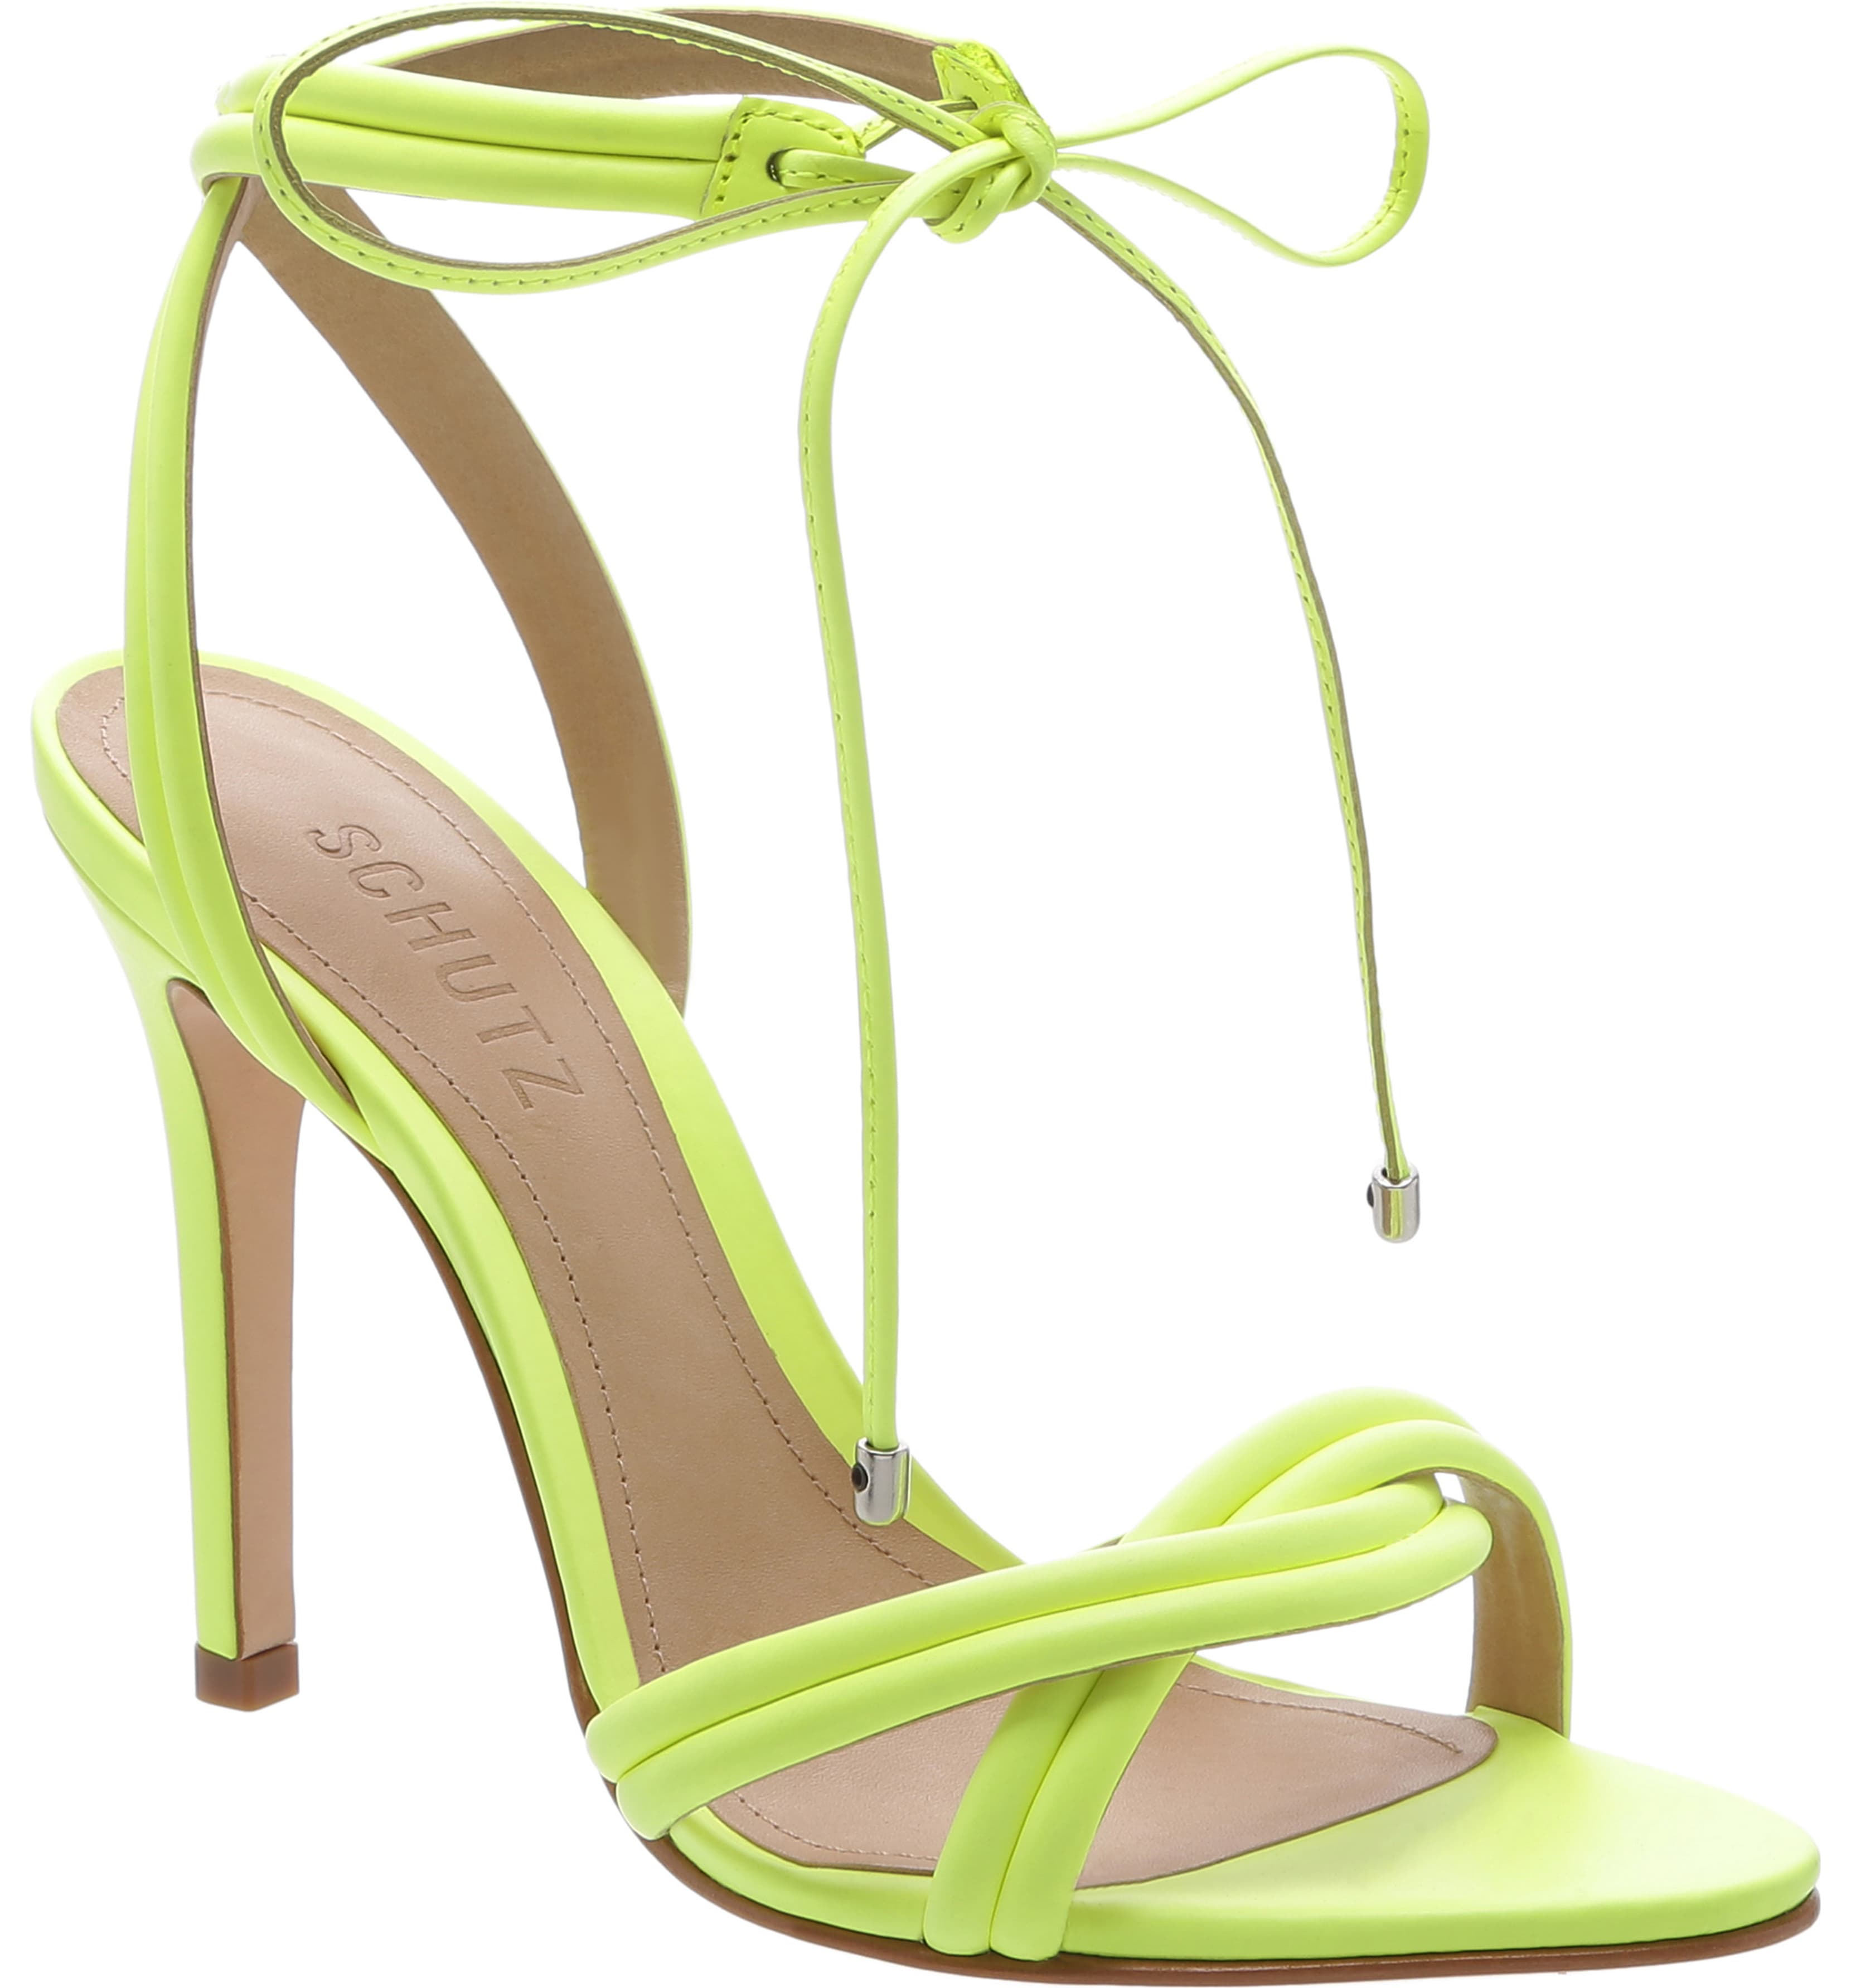 A lime green high heel shoe